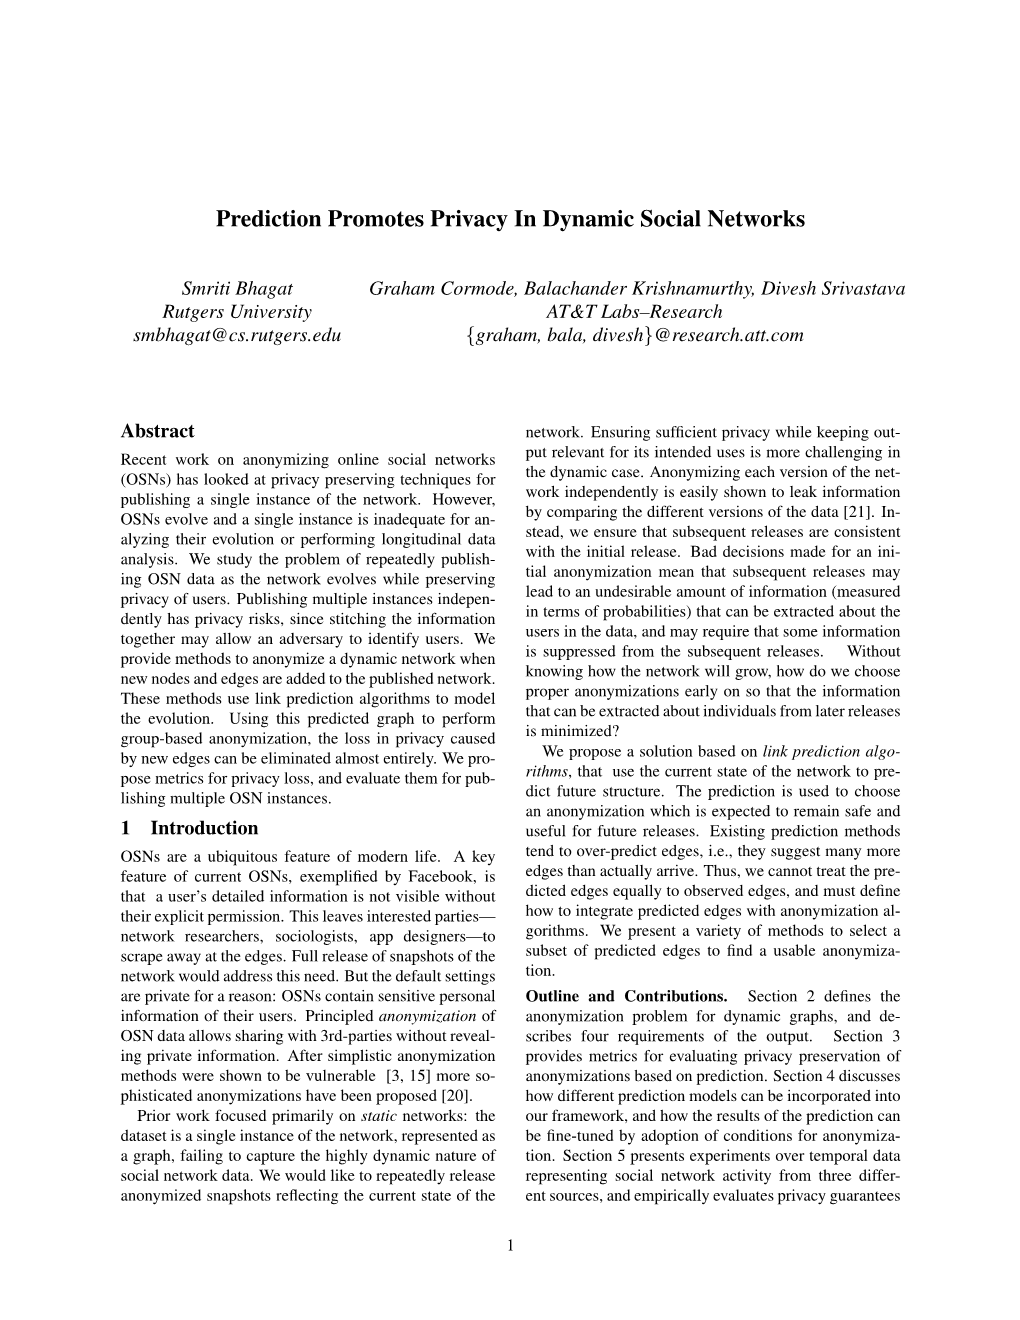 Prediction Promotes Privacy in Dynamic Social Networks